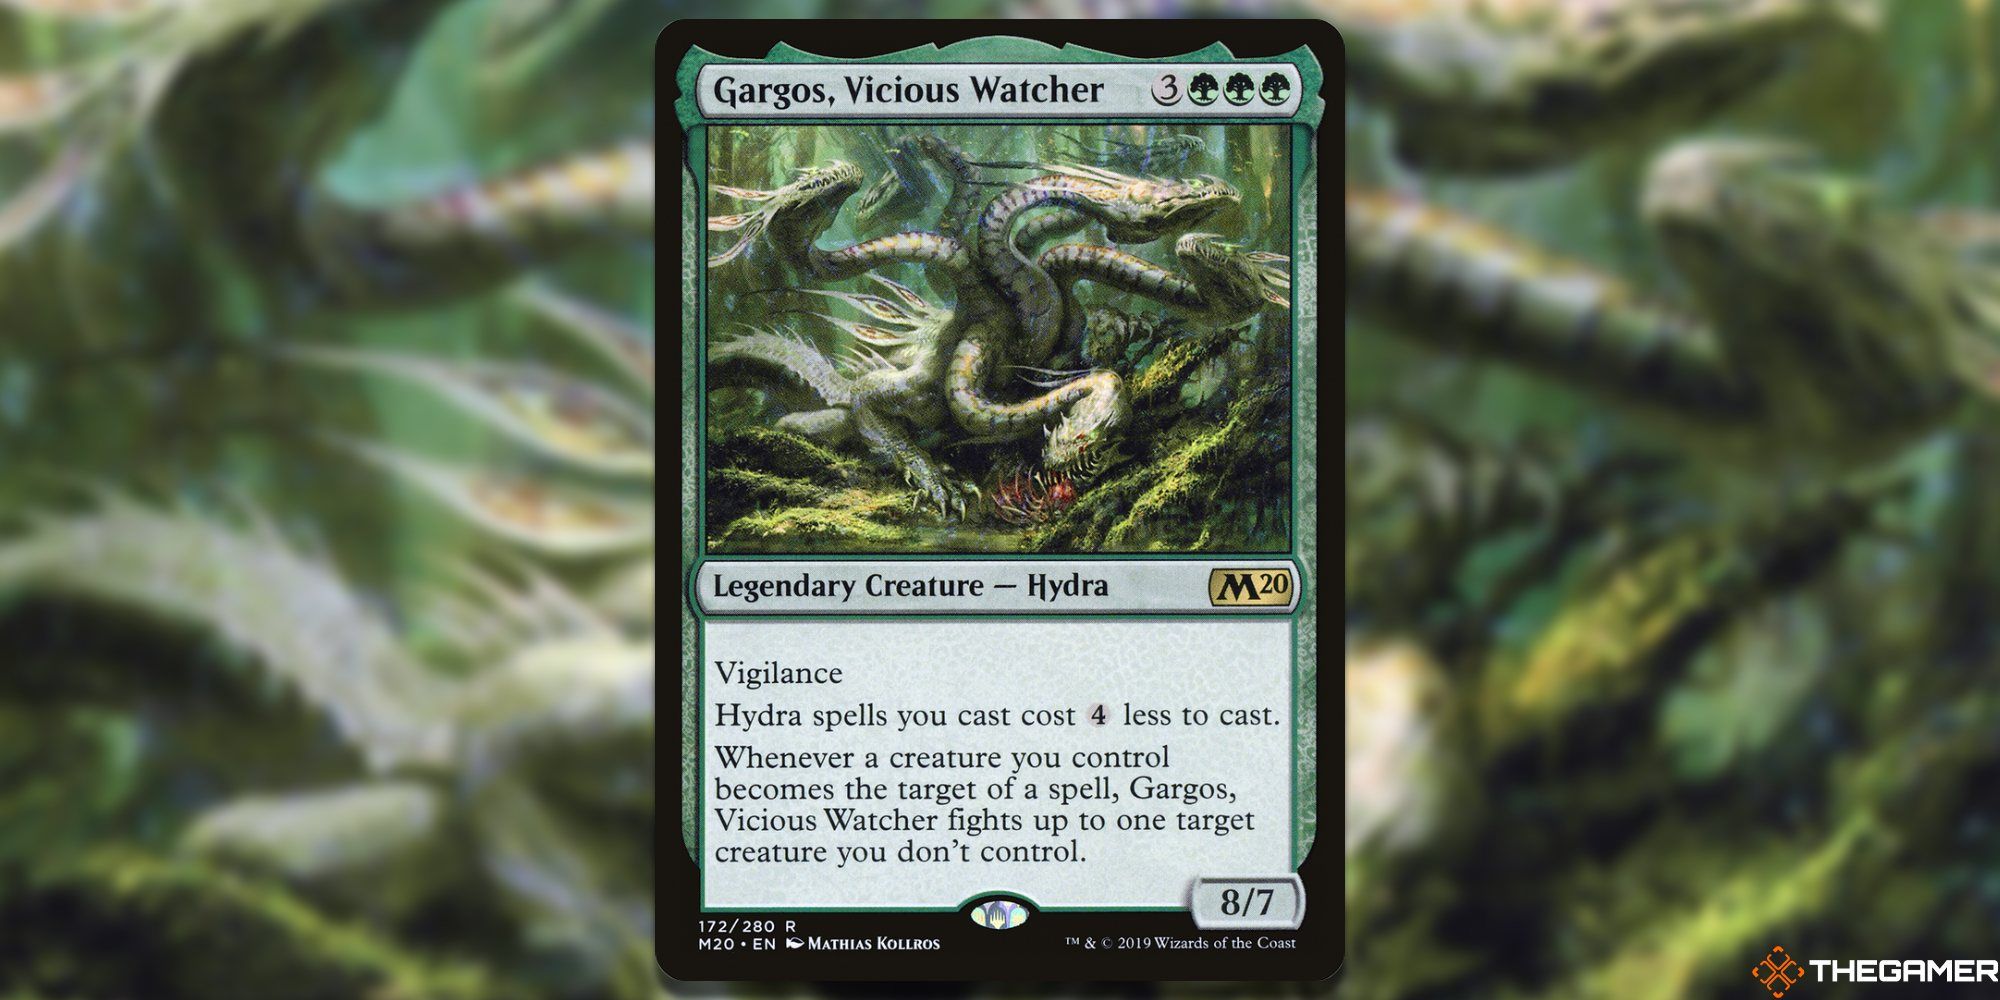 Gargos, Vicious Watcher card and blur